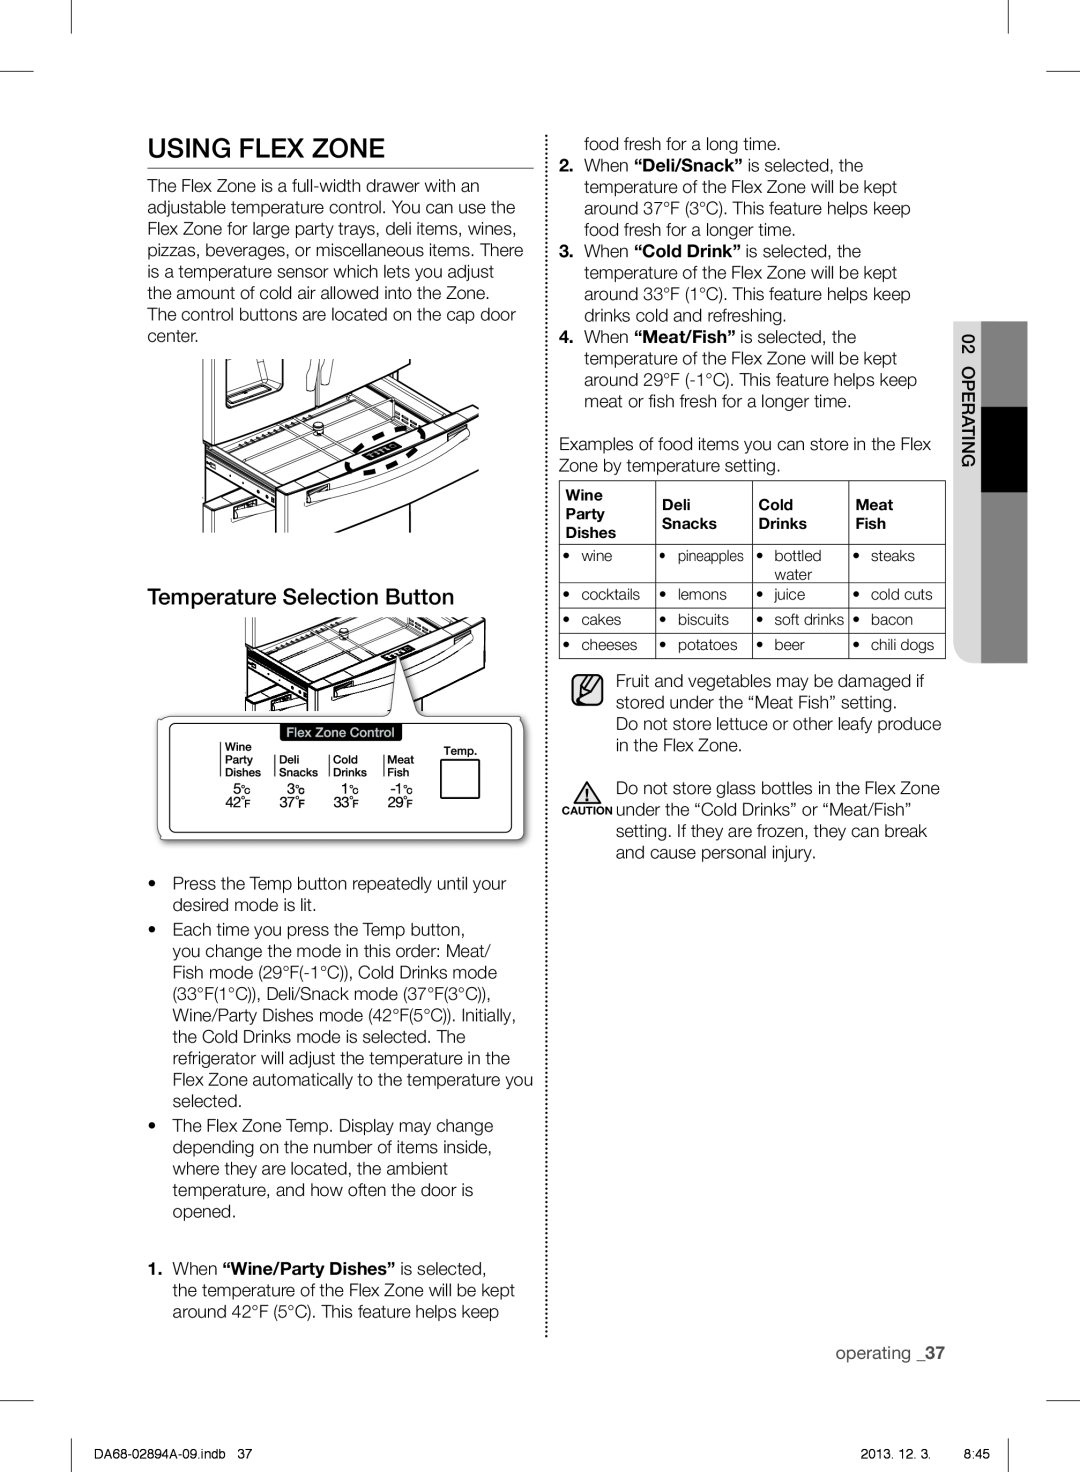 Samsung RF31FMESBSR, RF31FMEDBSR, RF31FMEDBBC user manual Using Flex Zone, Temperature Selection Button, operating 